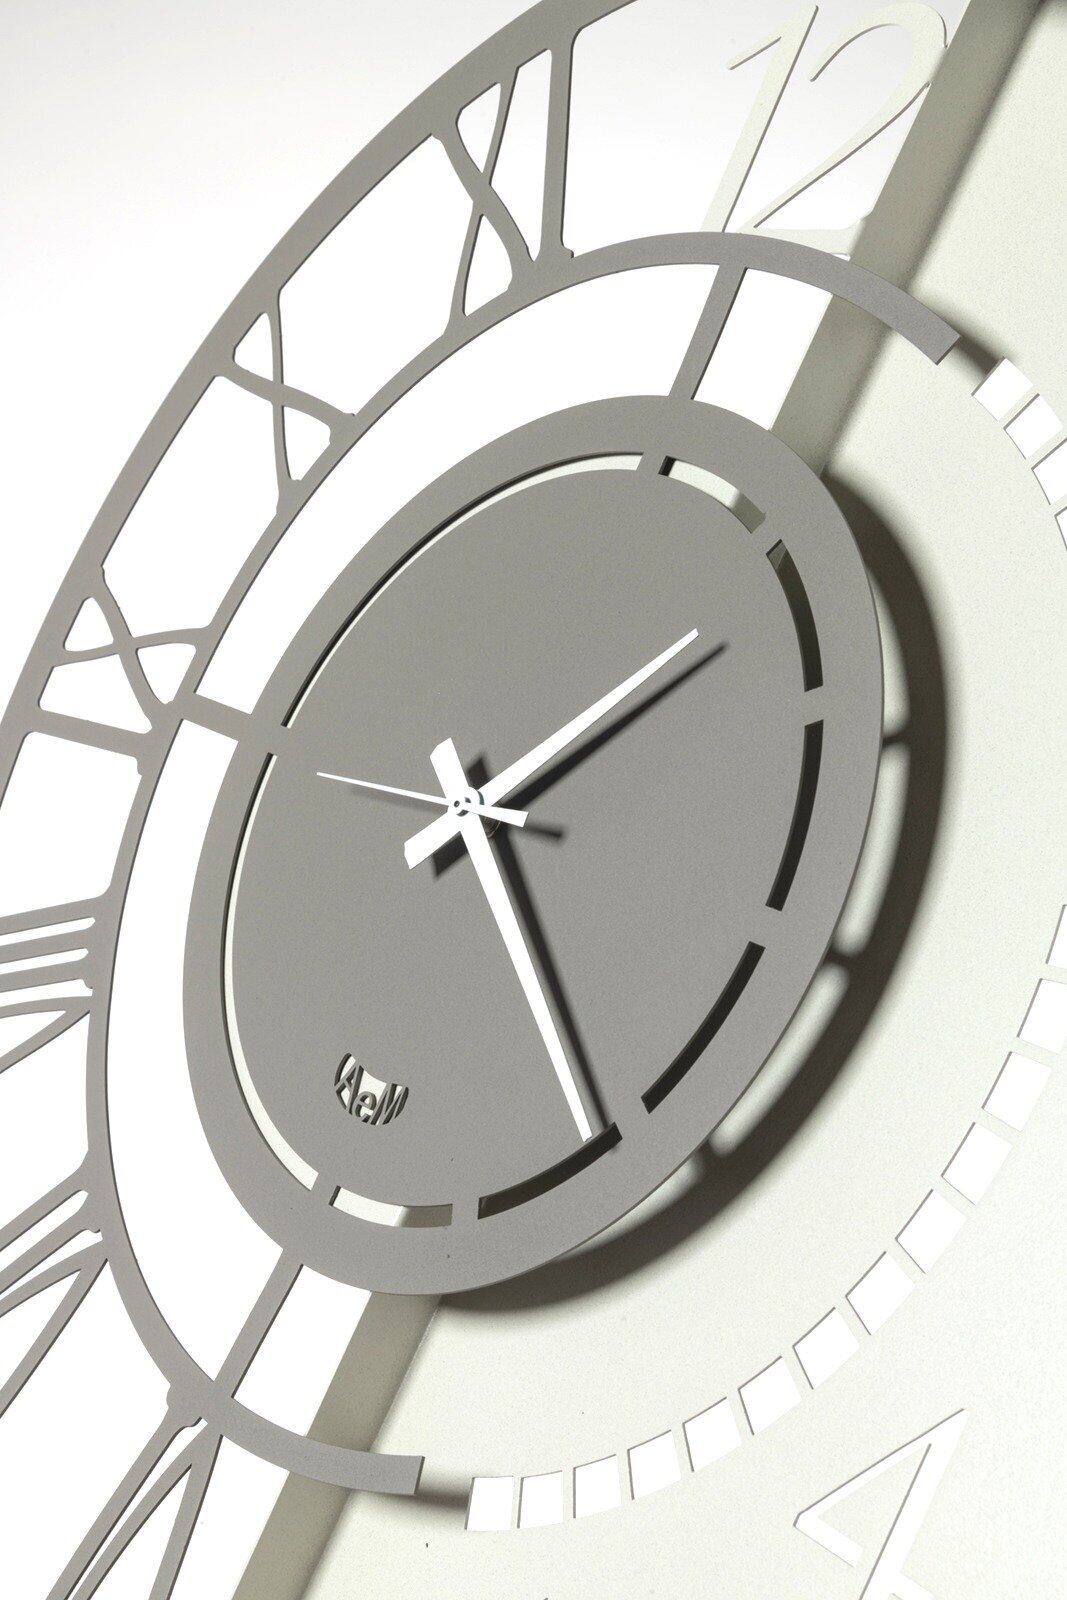 3625-C149 壁掛け時計 掛け時計 輸入時計 アイボリー グレー